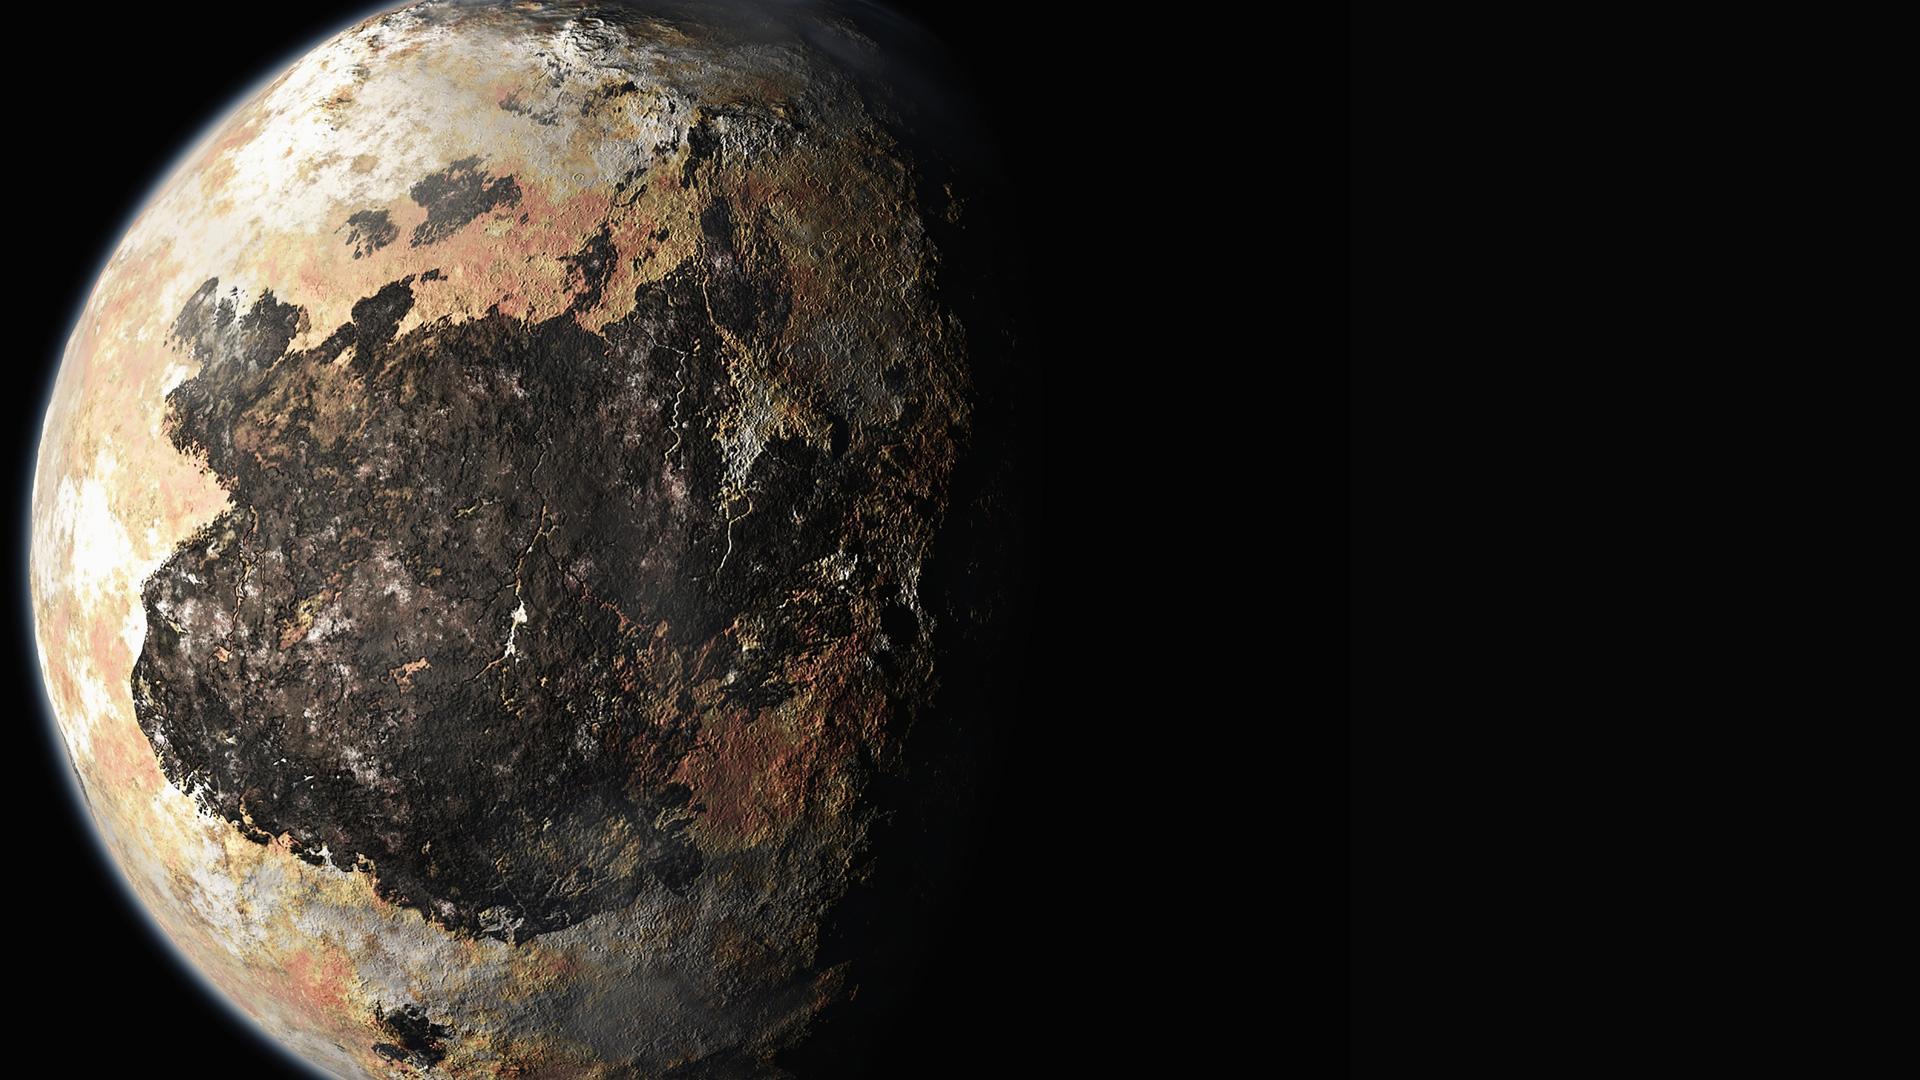 Pluto Planet Wallpaper HD 62404 1920x1080 px